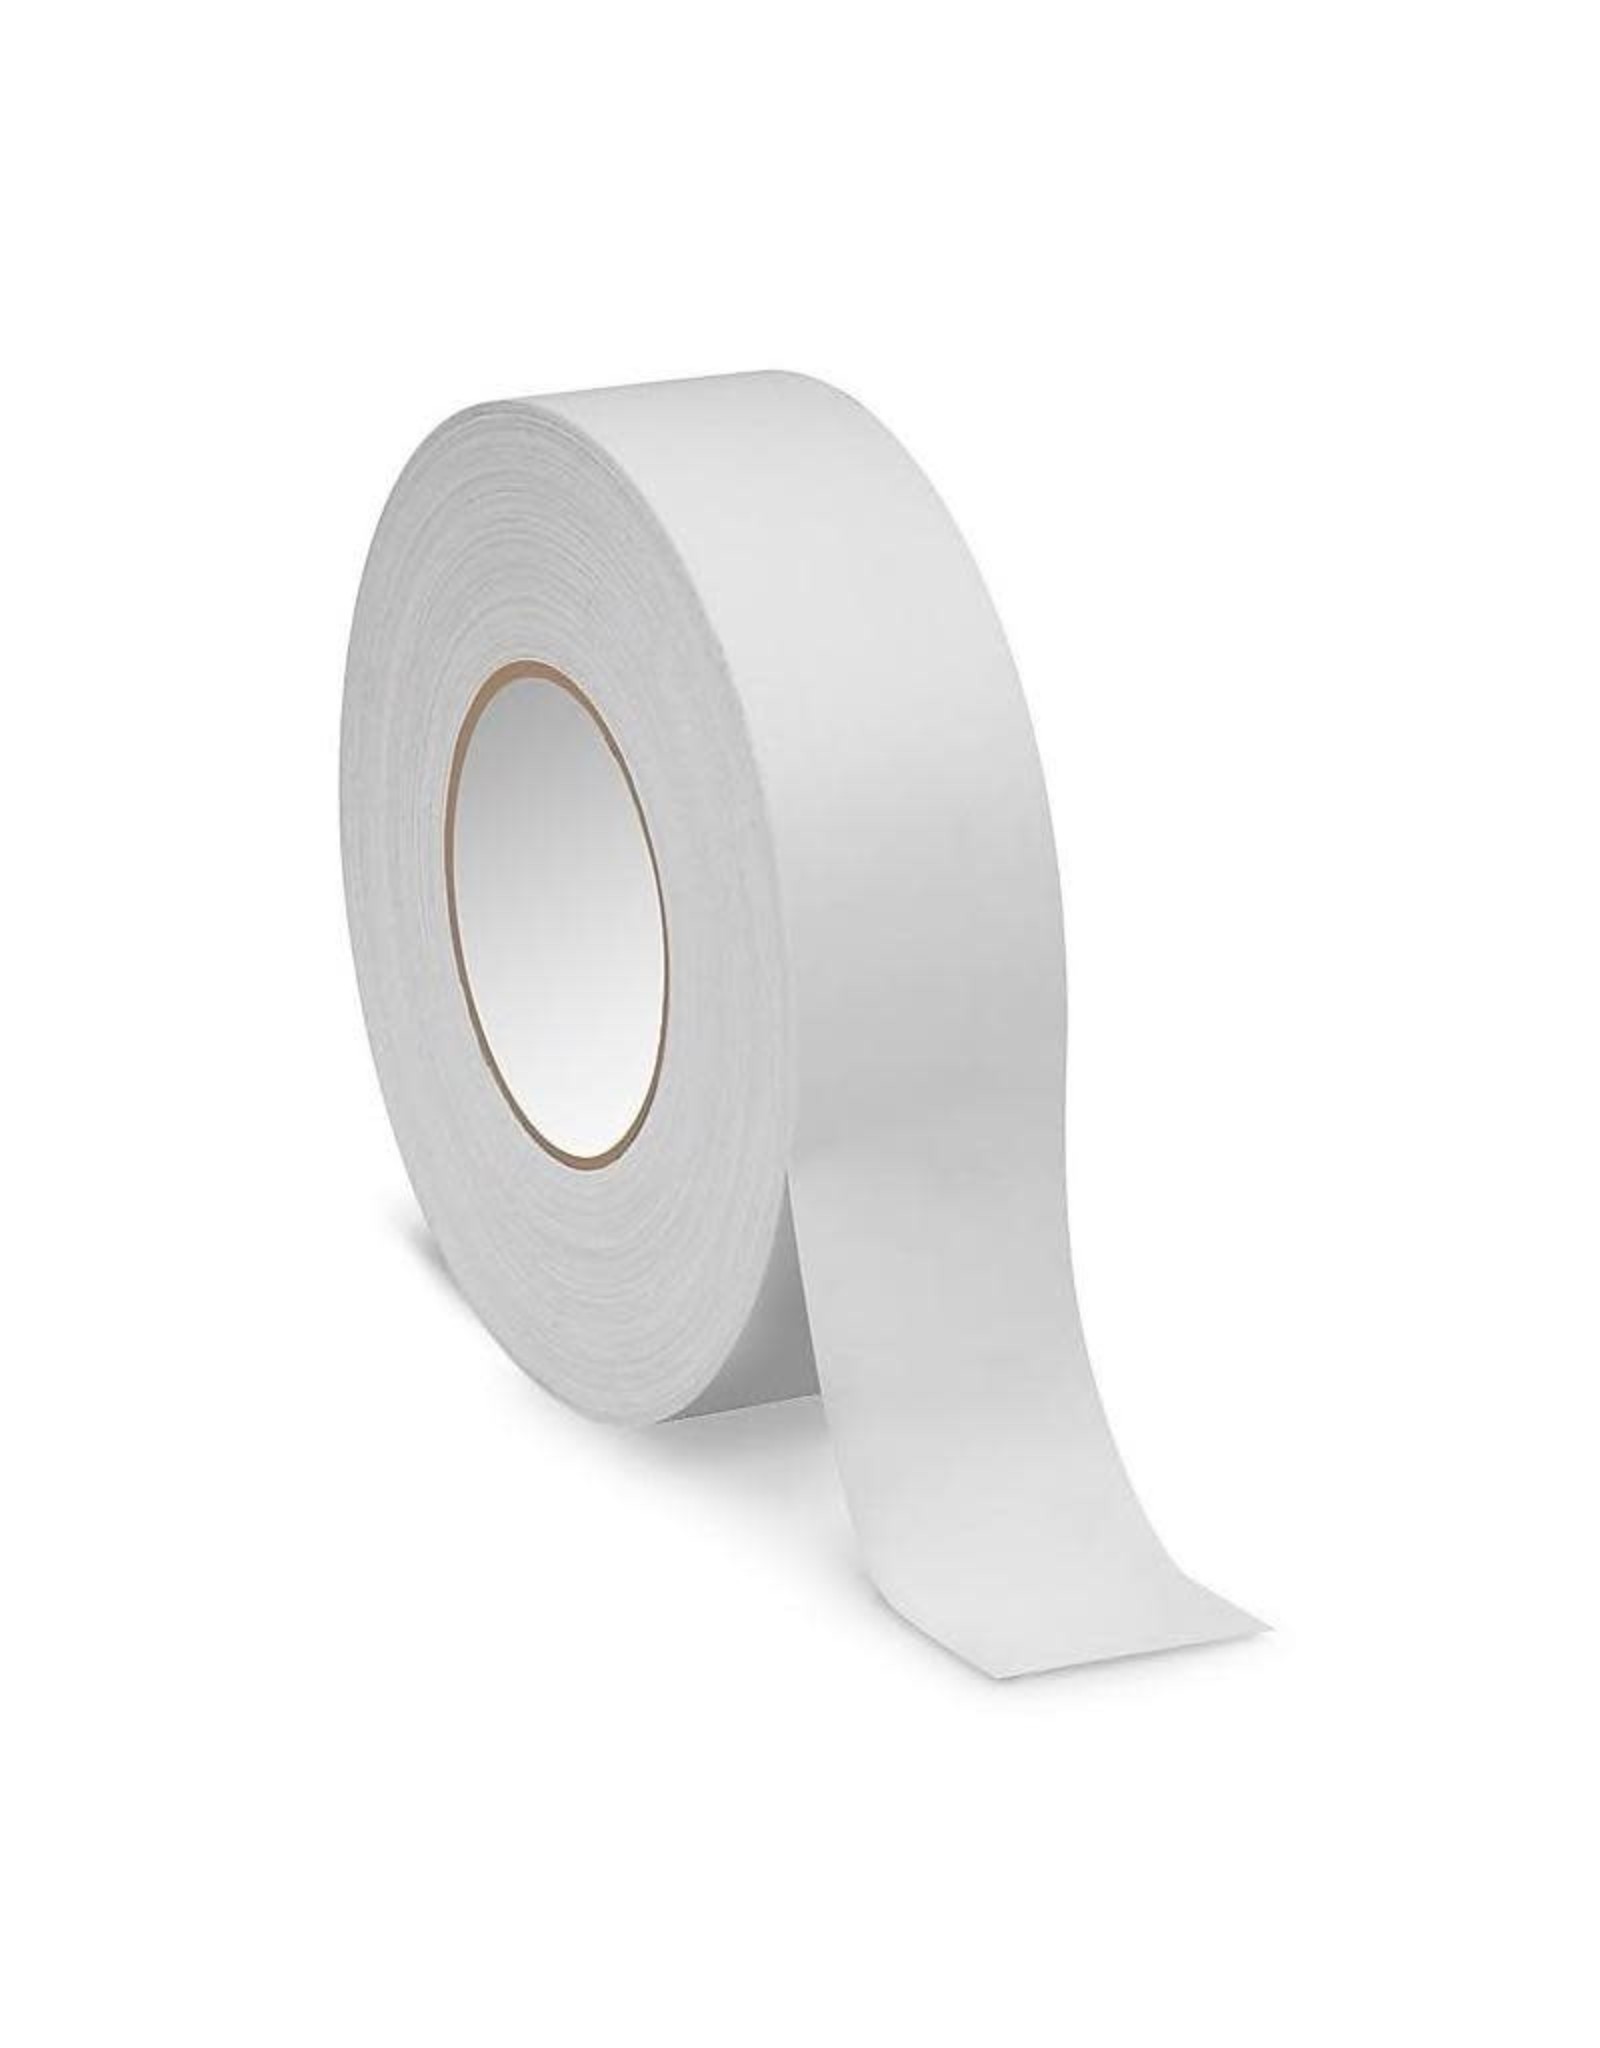 Tape - Gaffers Tape 2"x60yrds White